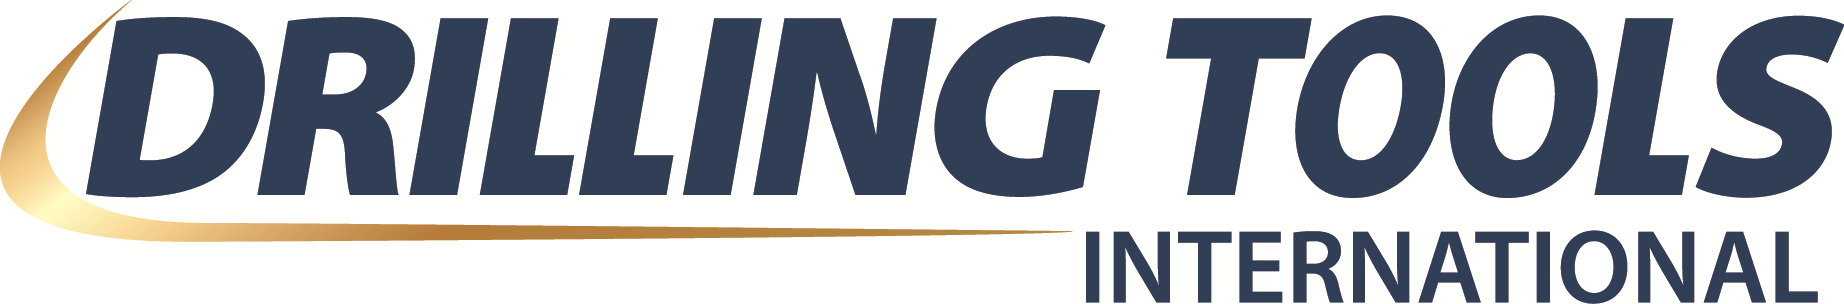 Drilling Tools International logo